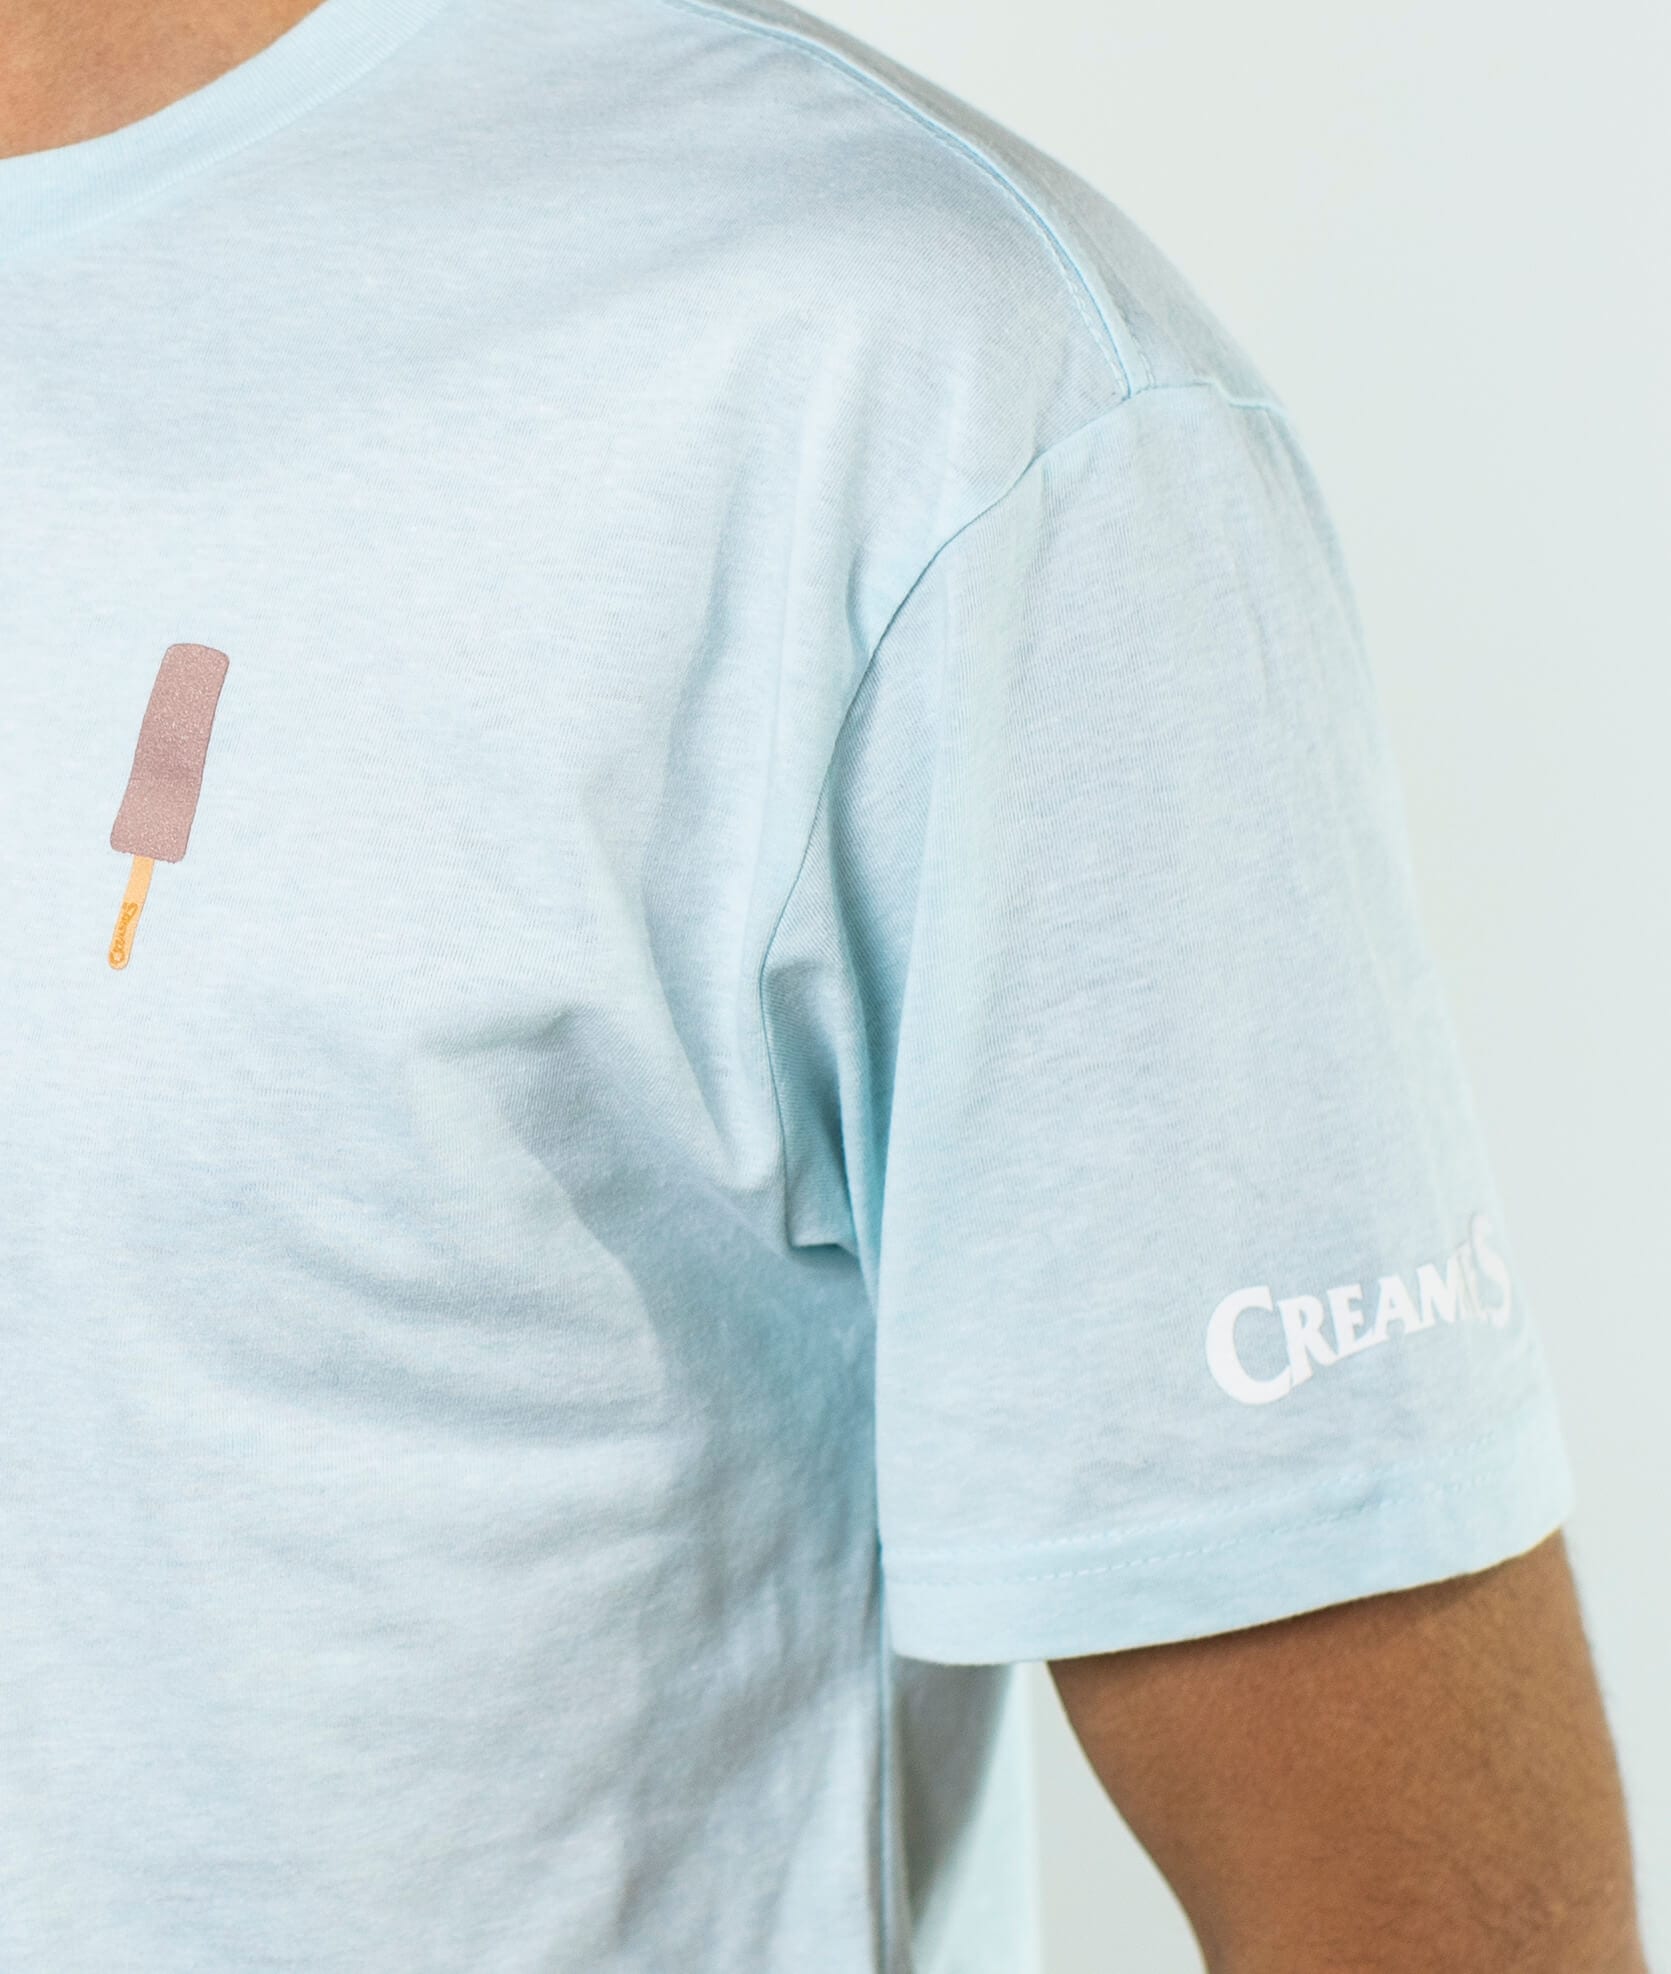 Creamies Ice Blue T-shirt | Creamies